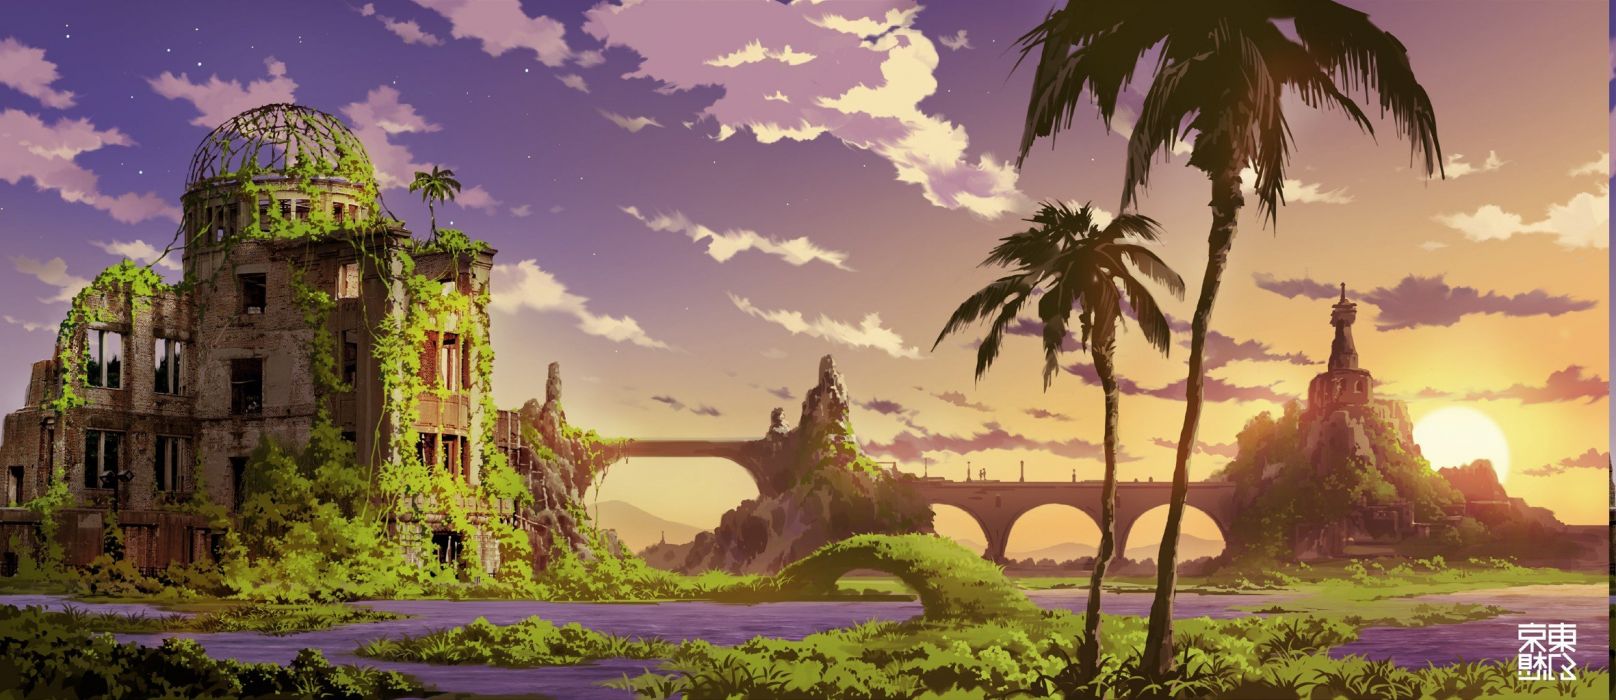 Anime fantasy Art landscape wallpaperx1023